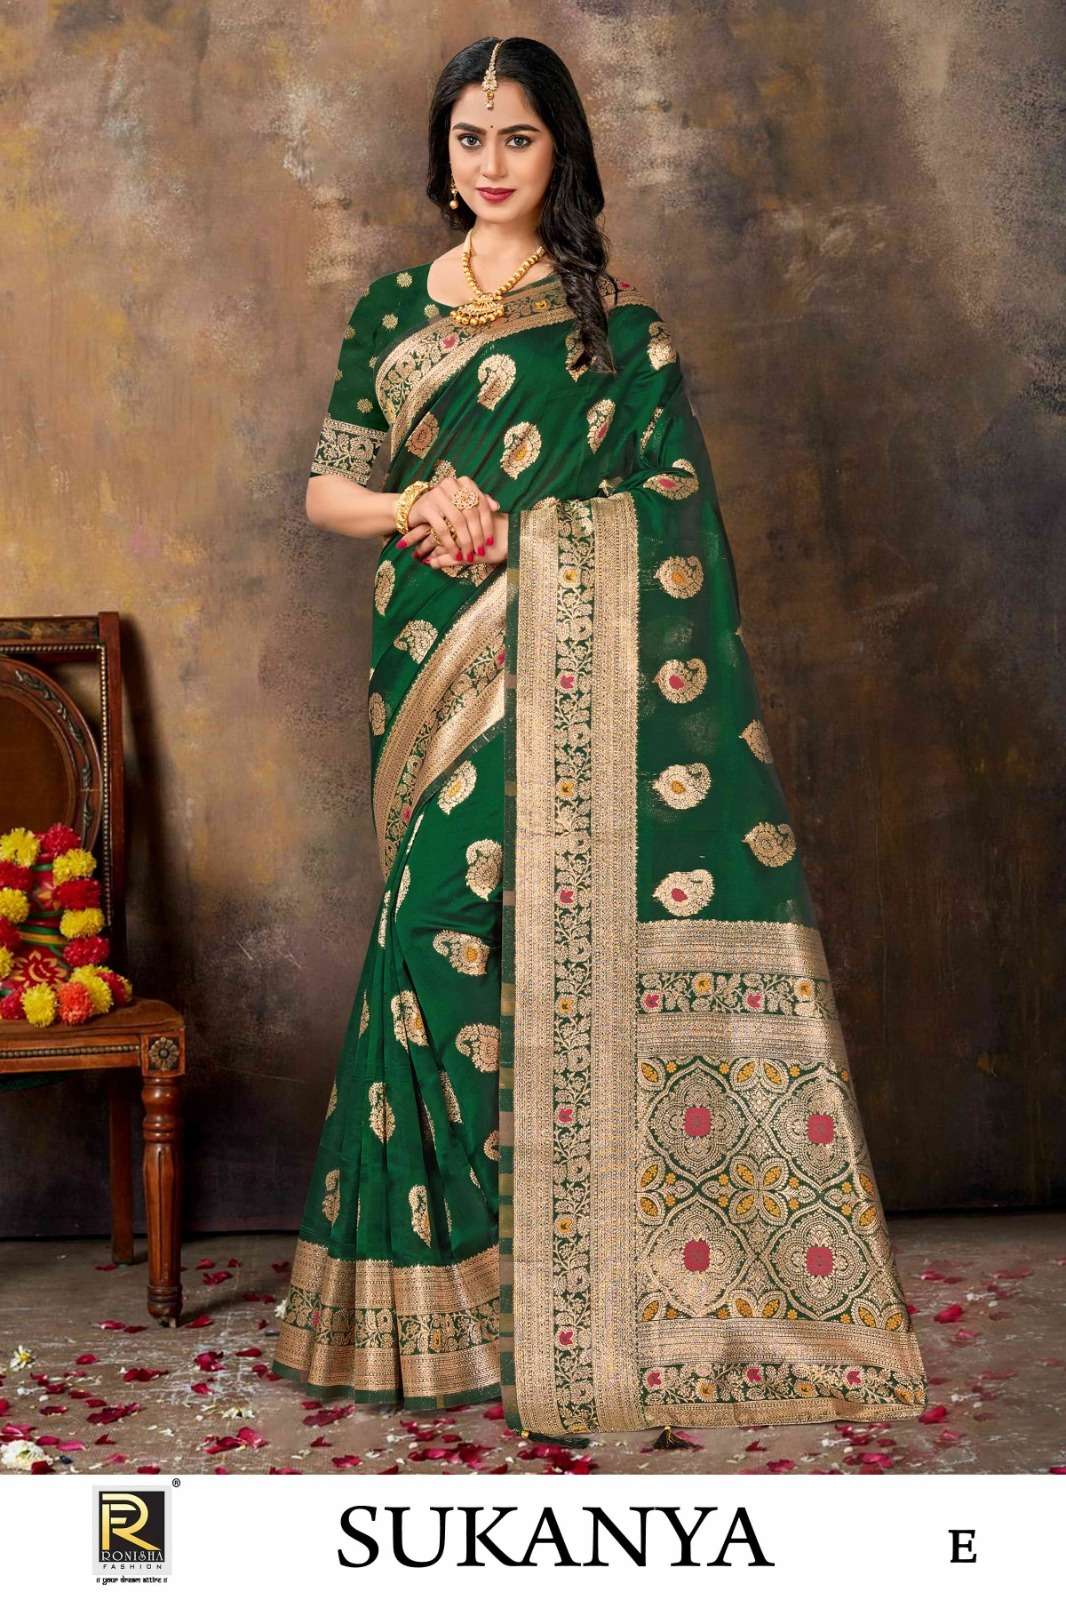 Ronisha Sukanya Banarasi Silk Saree Wholesale catalog